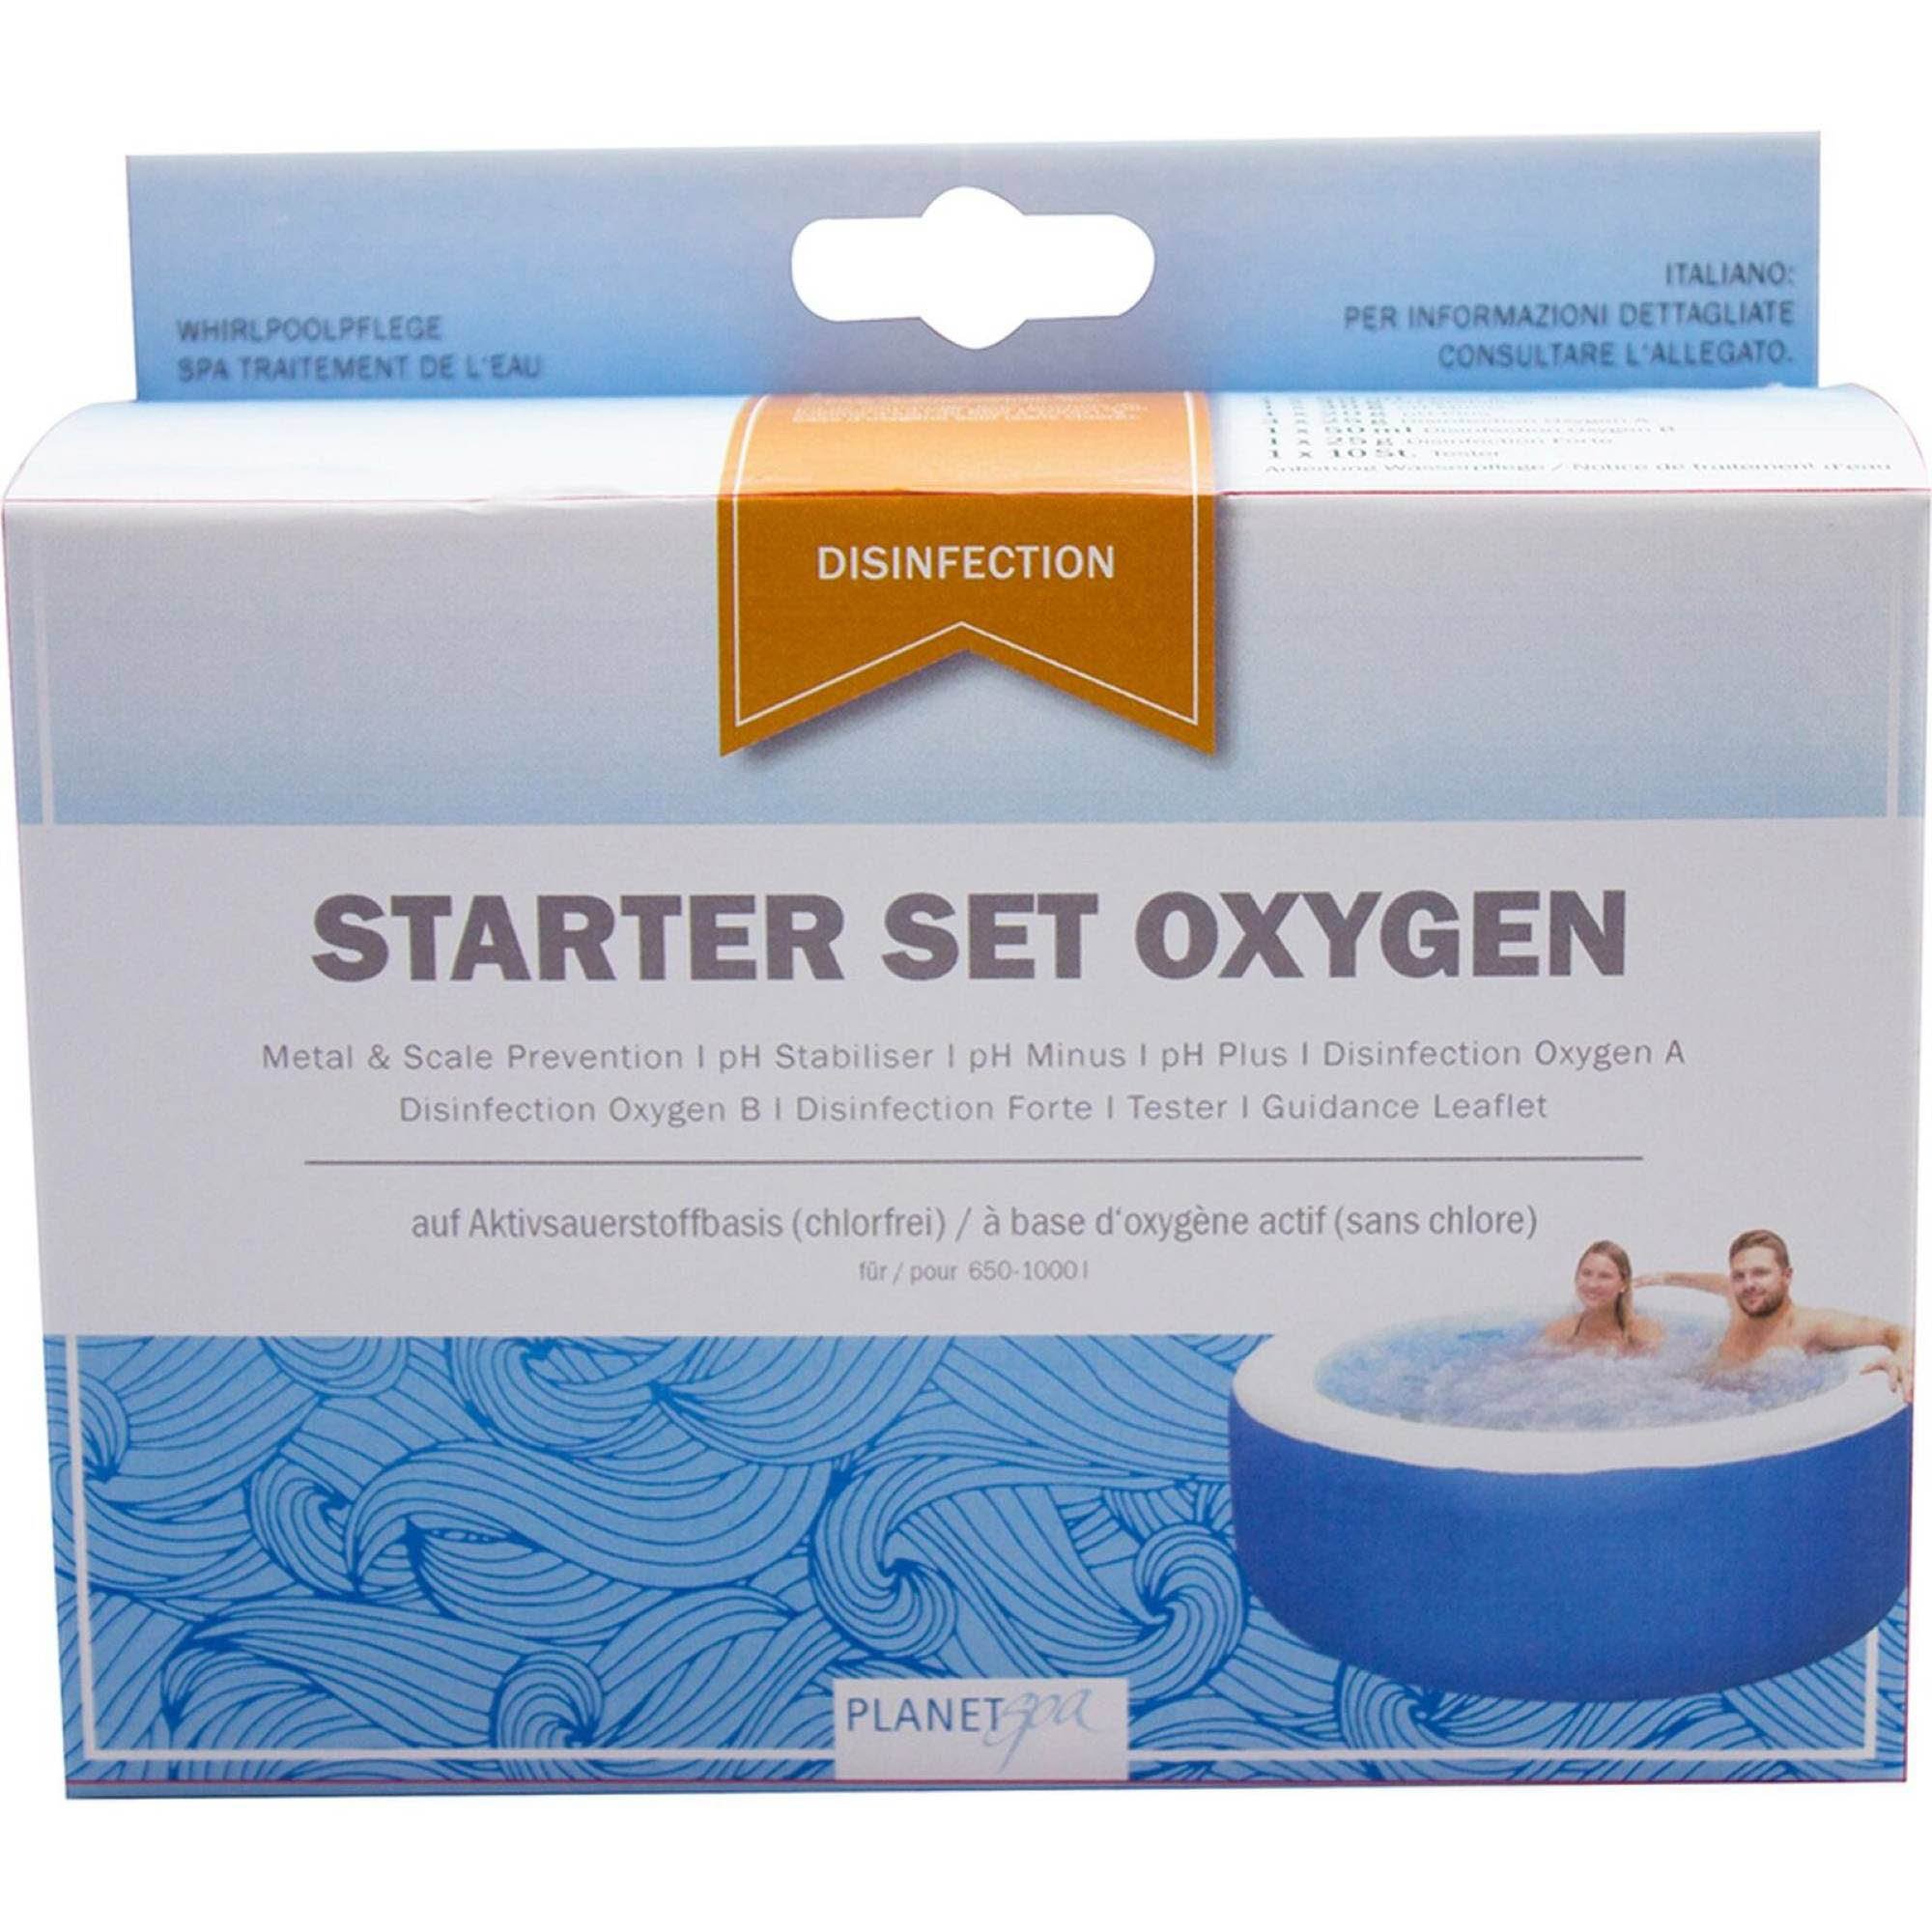 Planet Spa Starter Set Oxygen, Desinfection Sauerstoff Basis